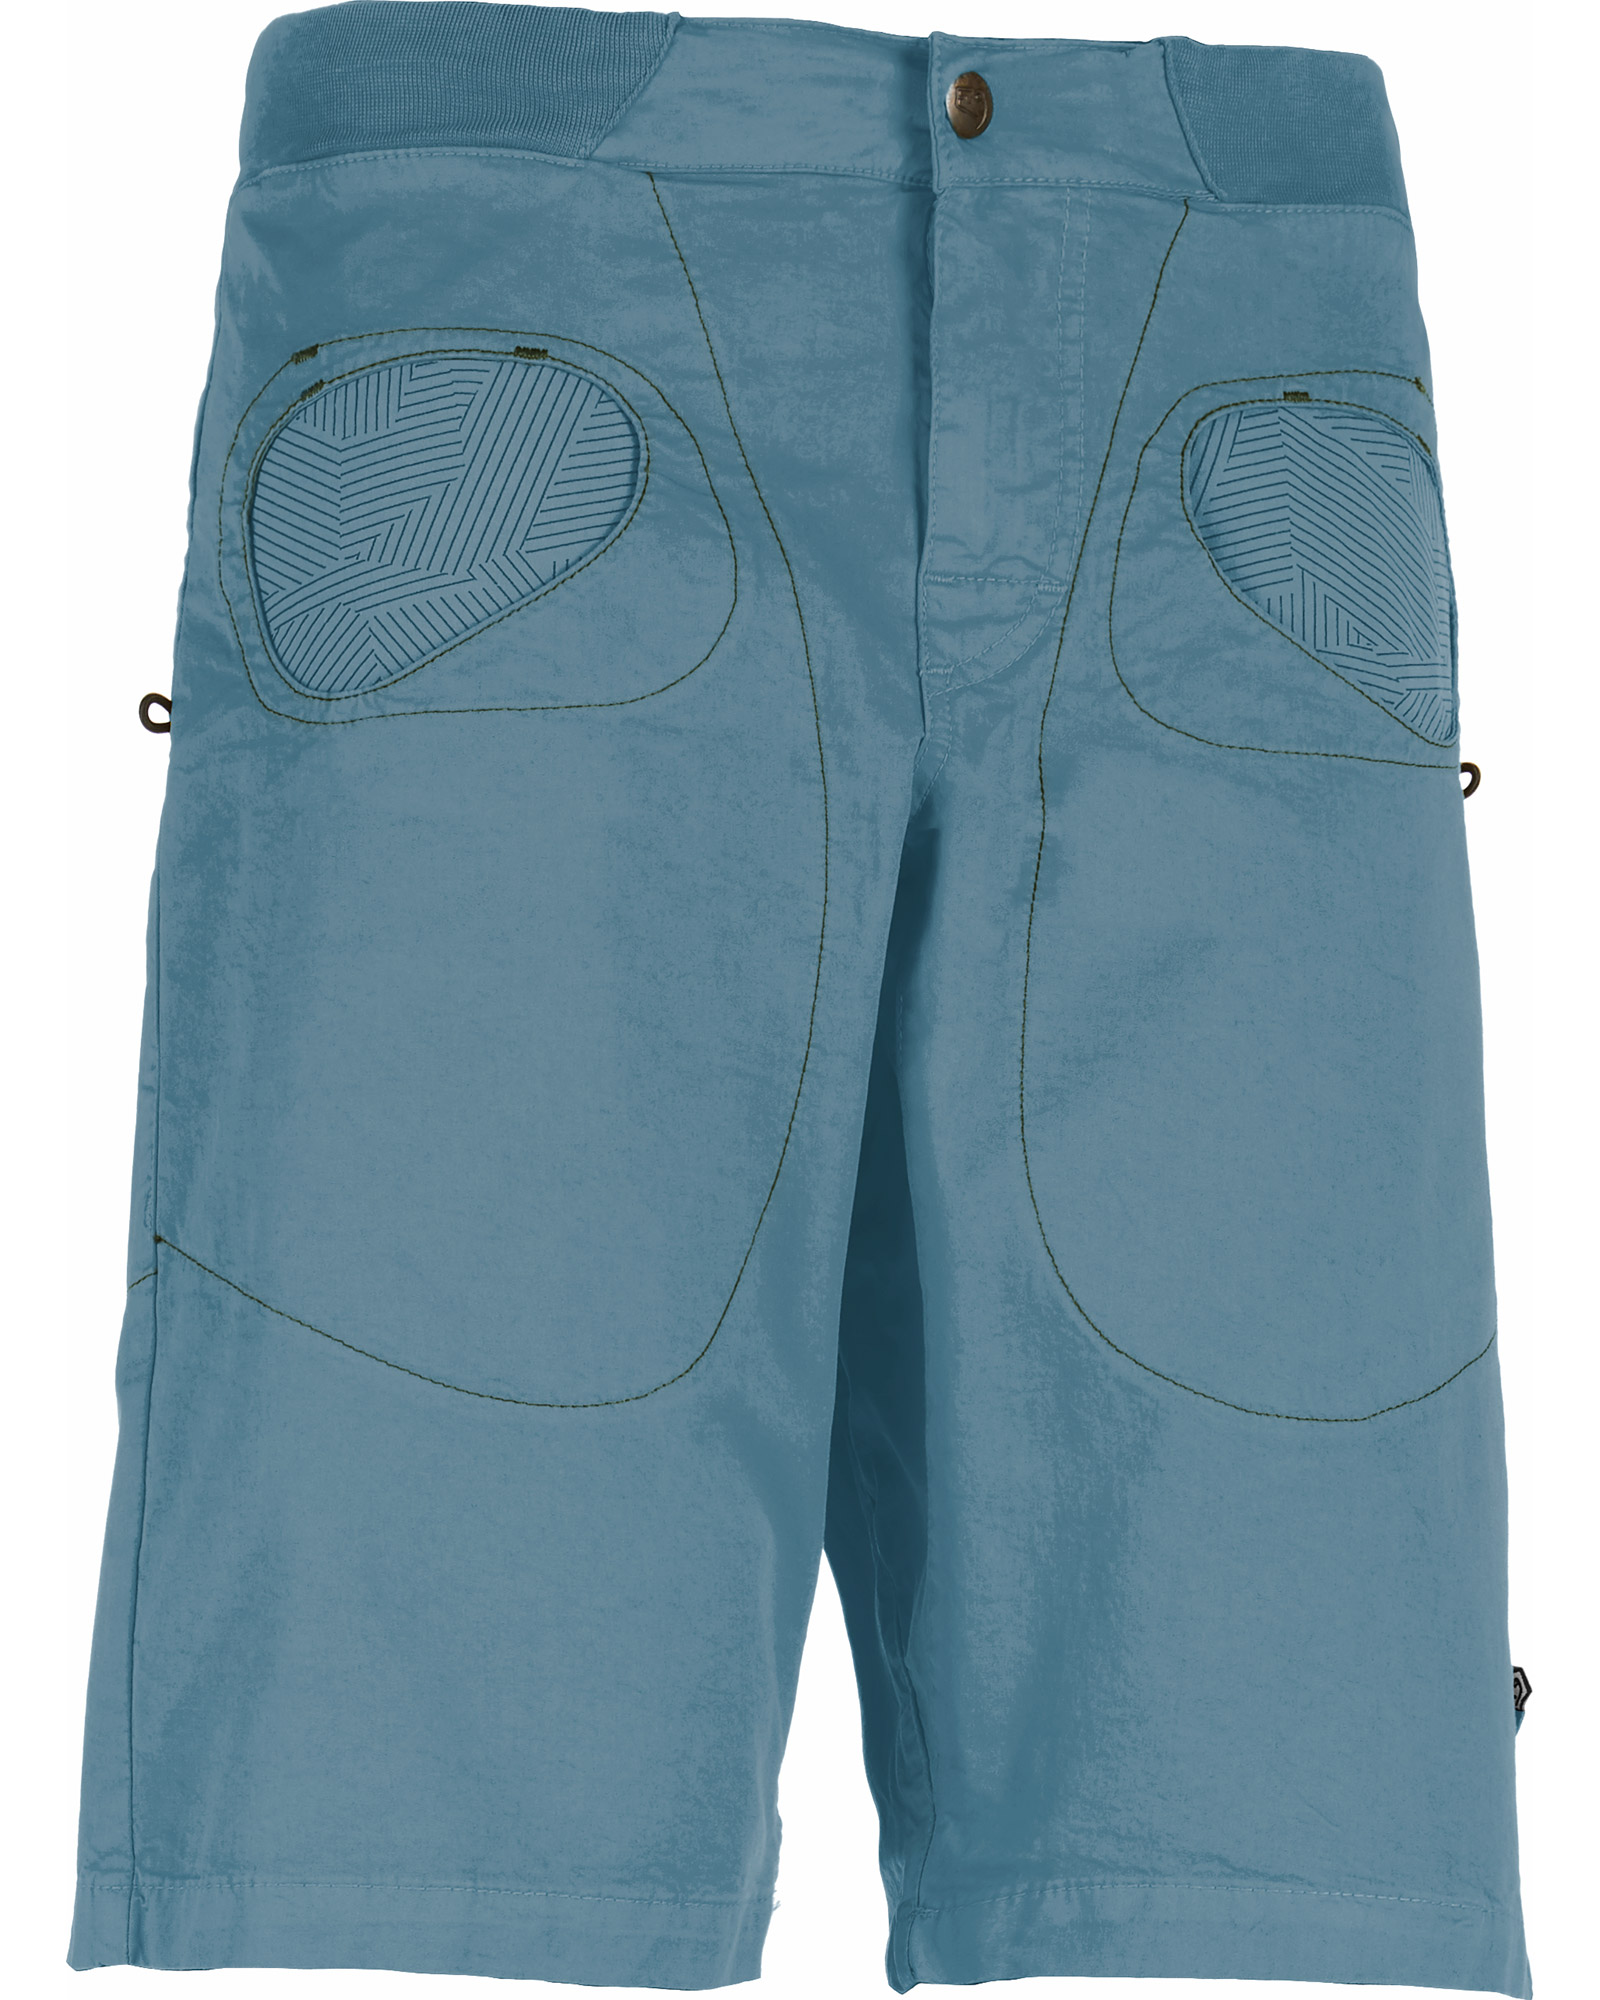 E9 - Men's Rondo Short Shorts - M